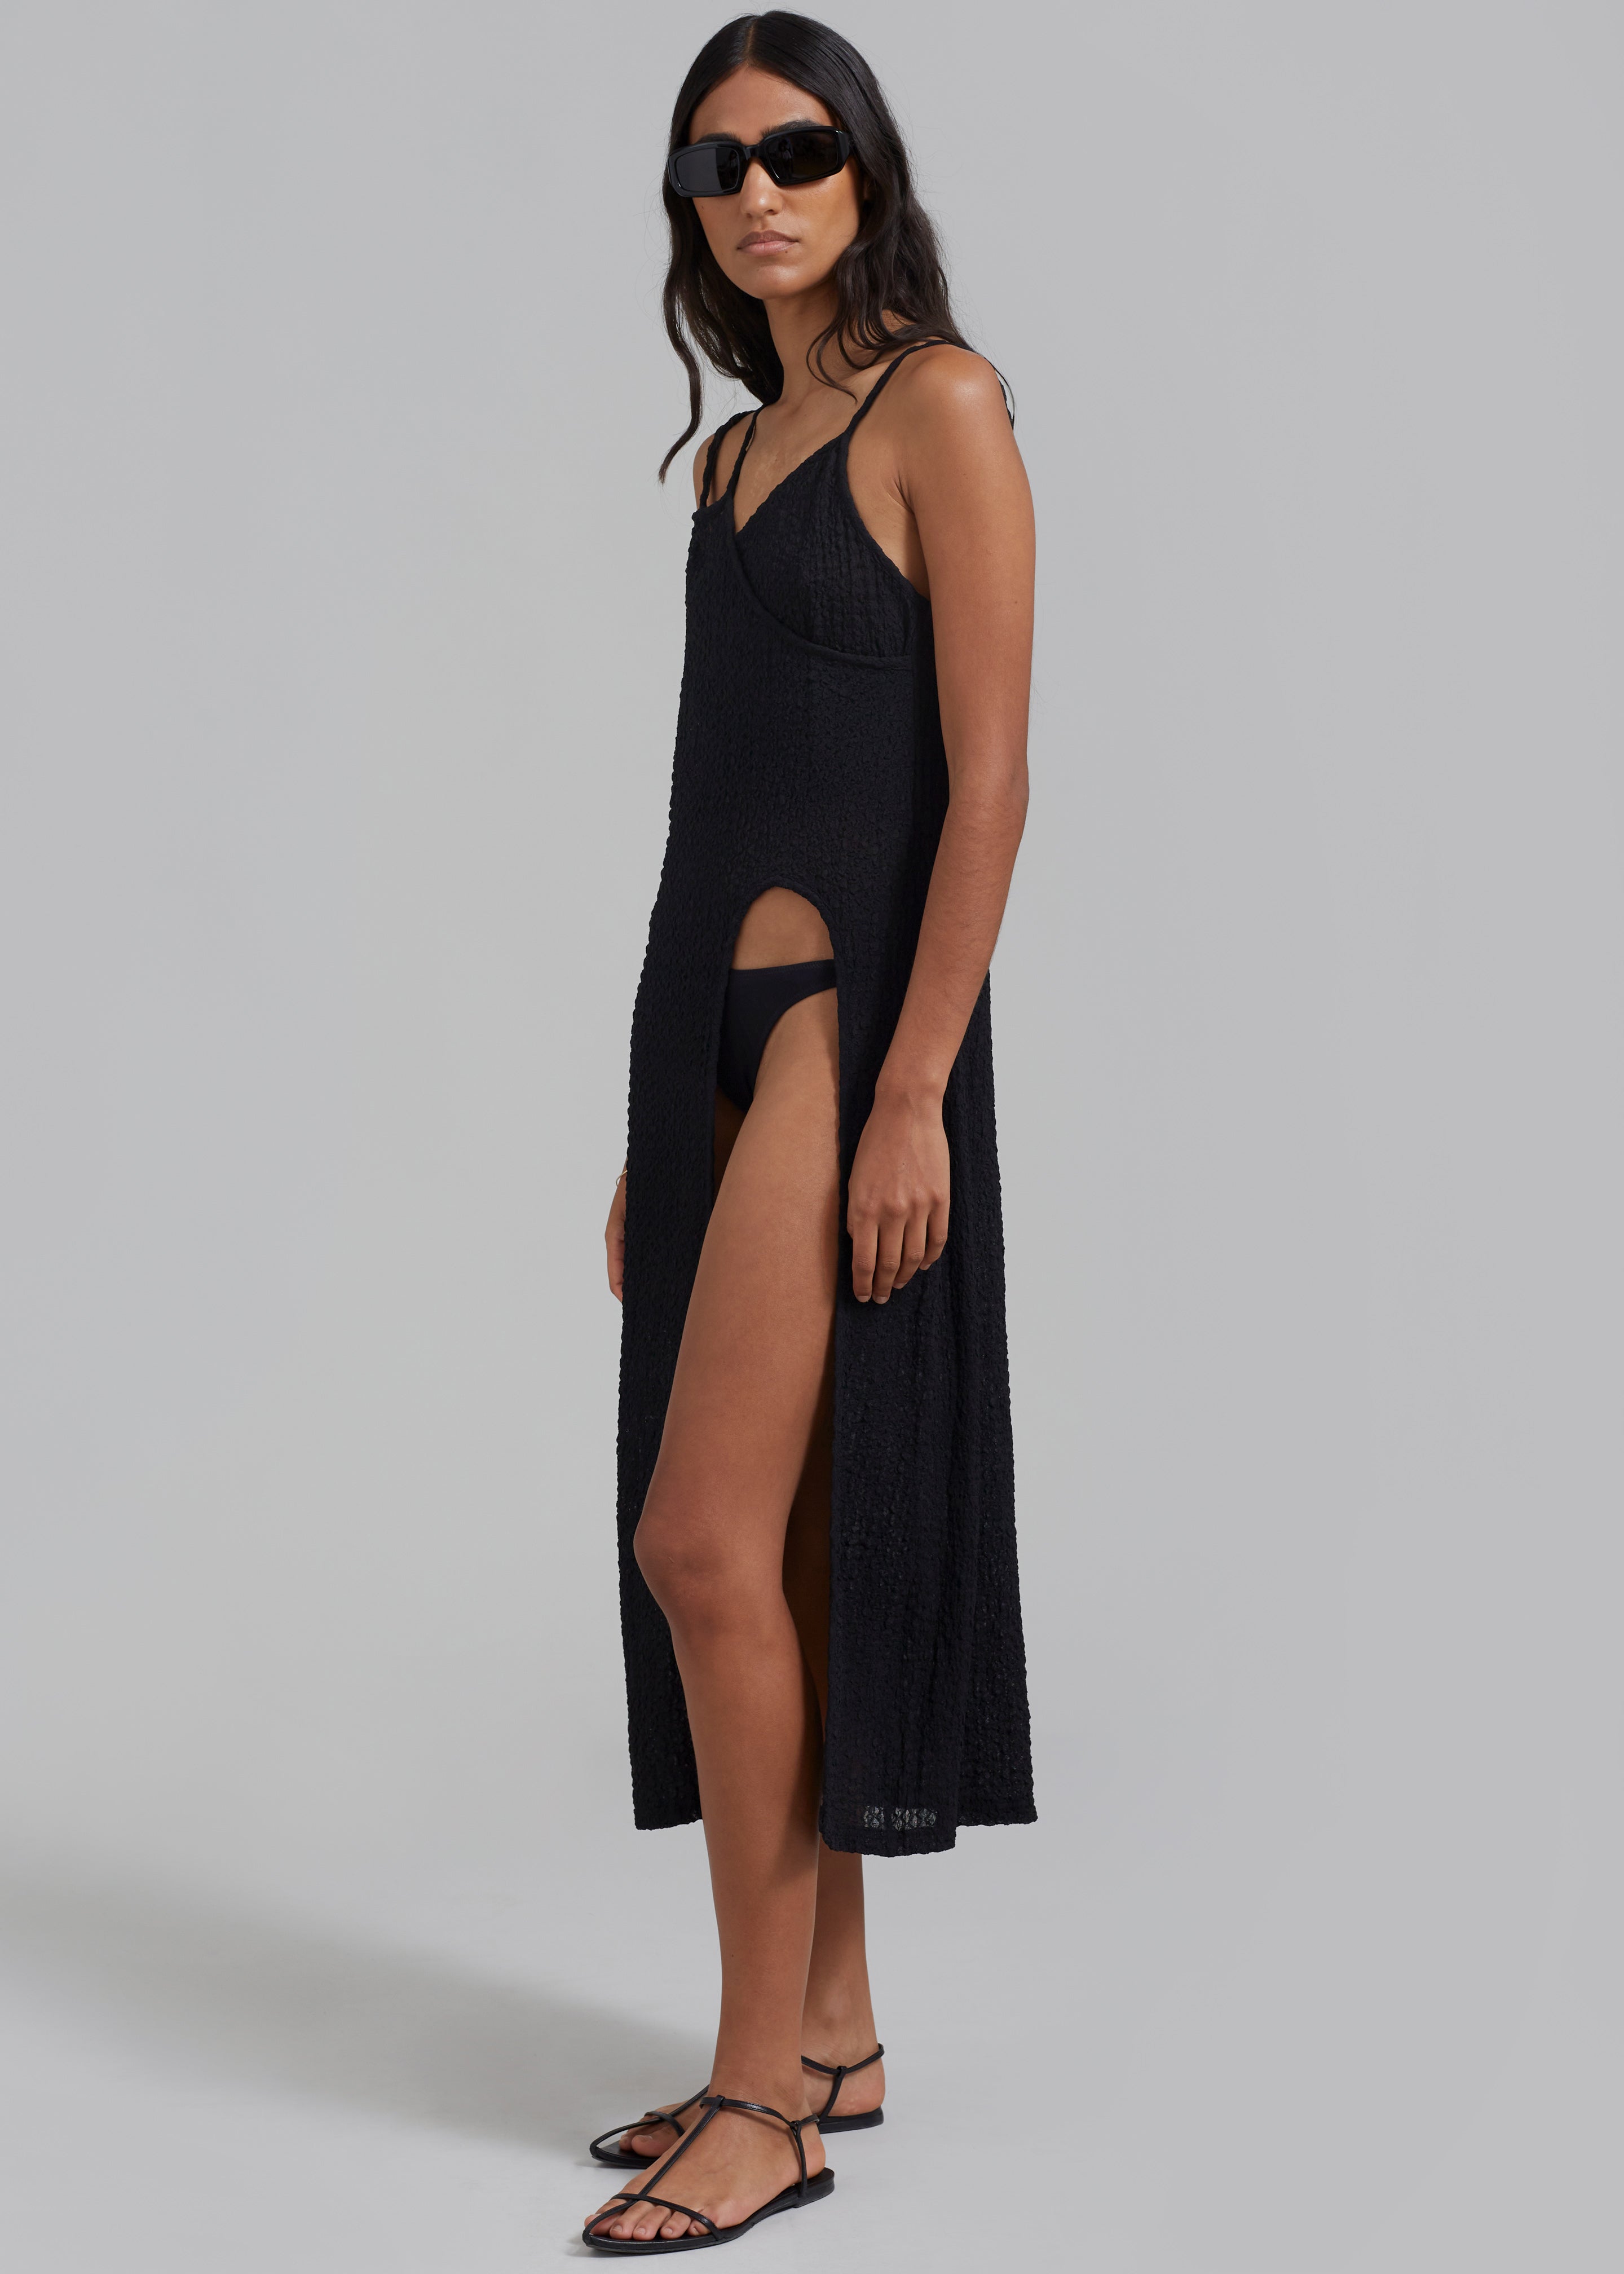 Cali Crochet Dress - Black - 1